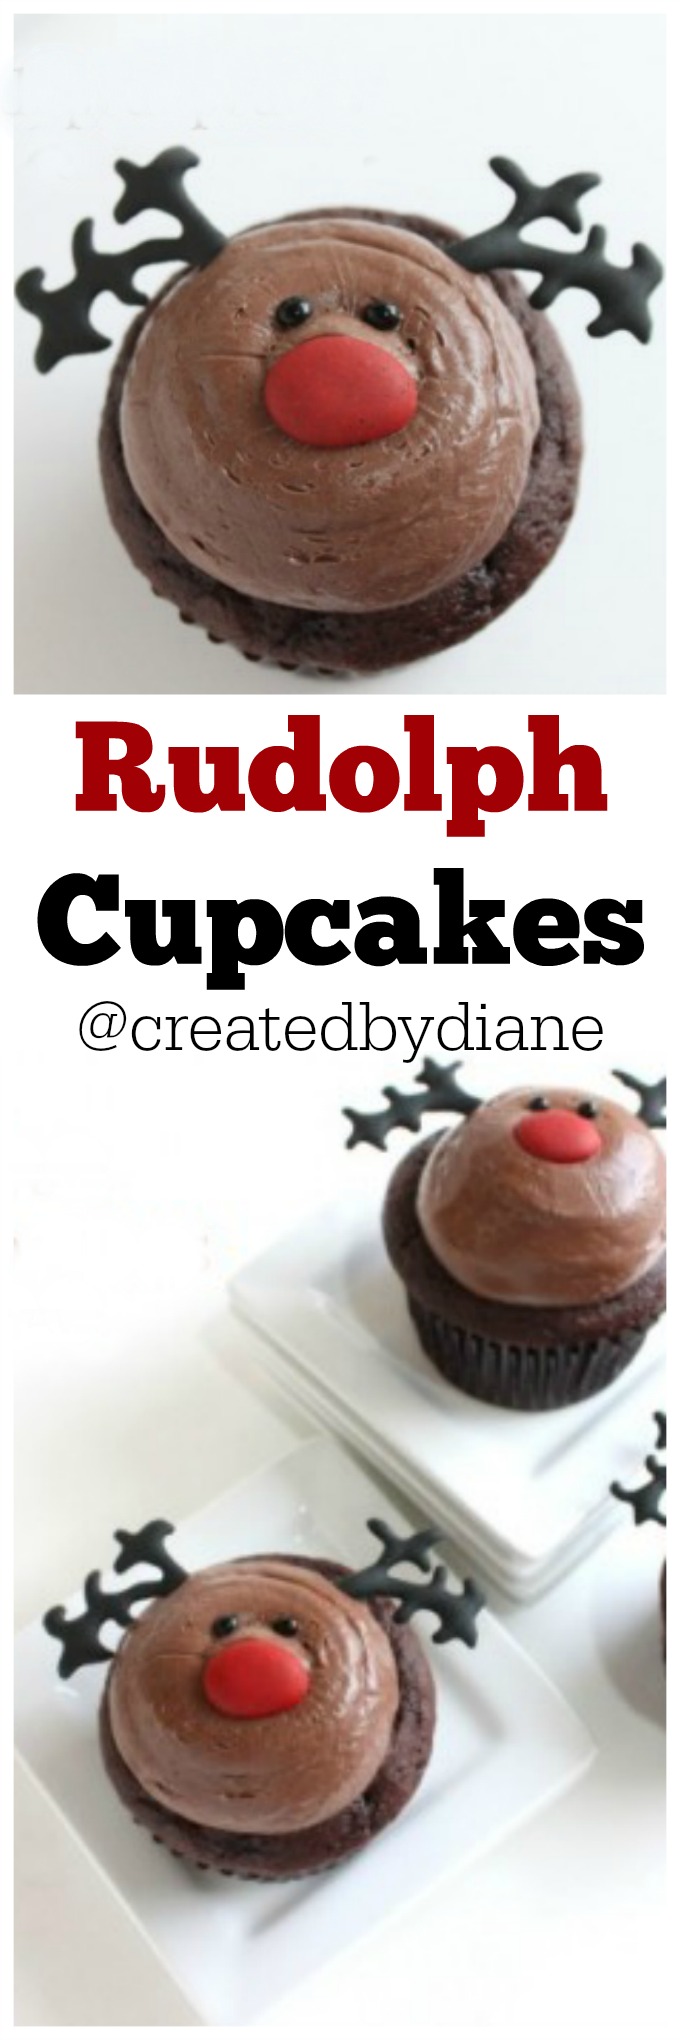 Rudolph Cupcakes @createdbydiane Holiday Cupcakes